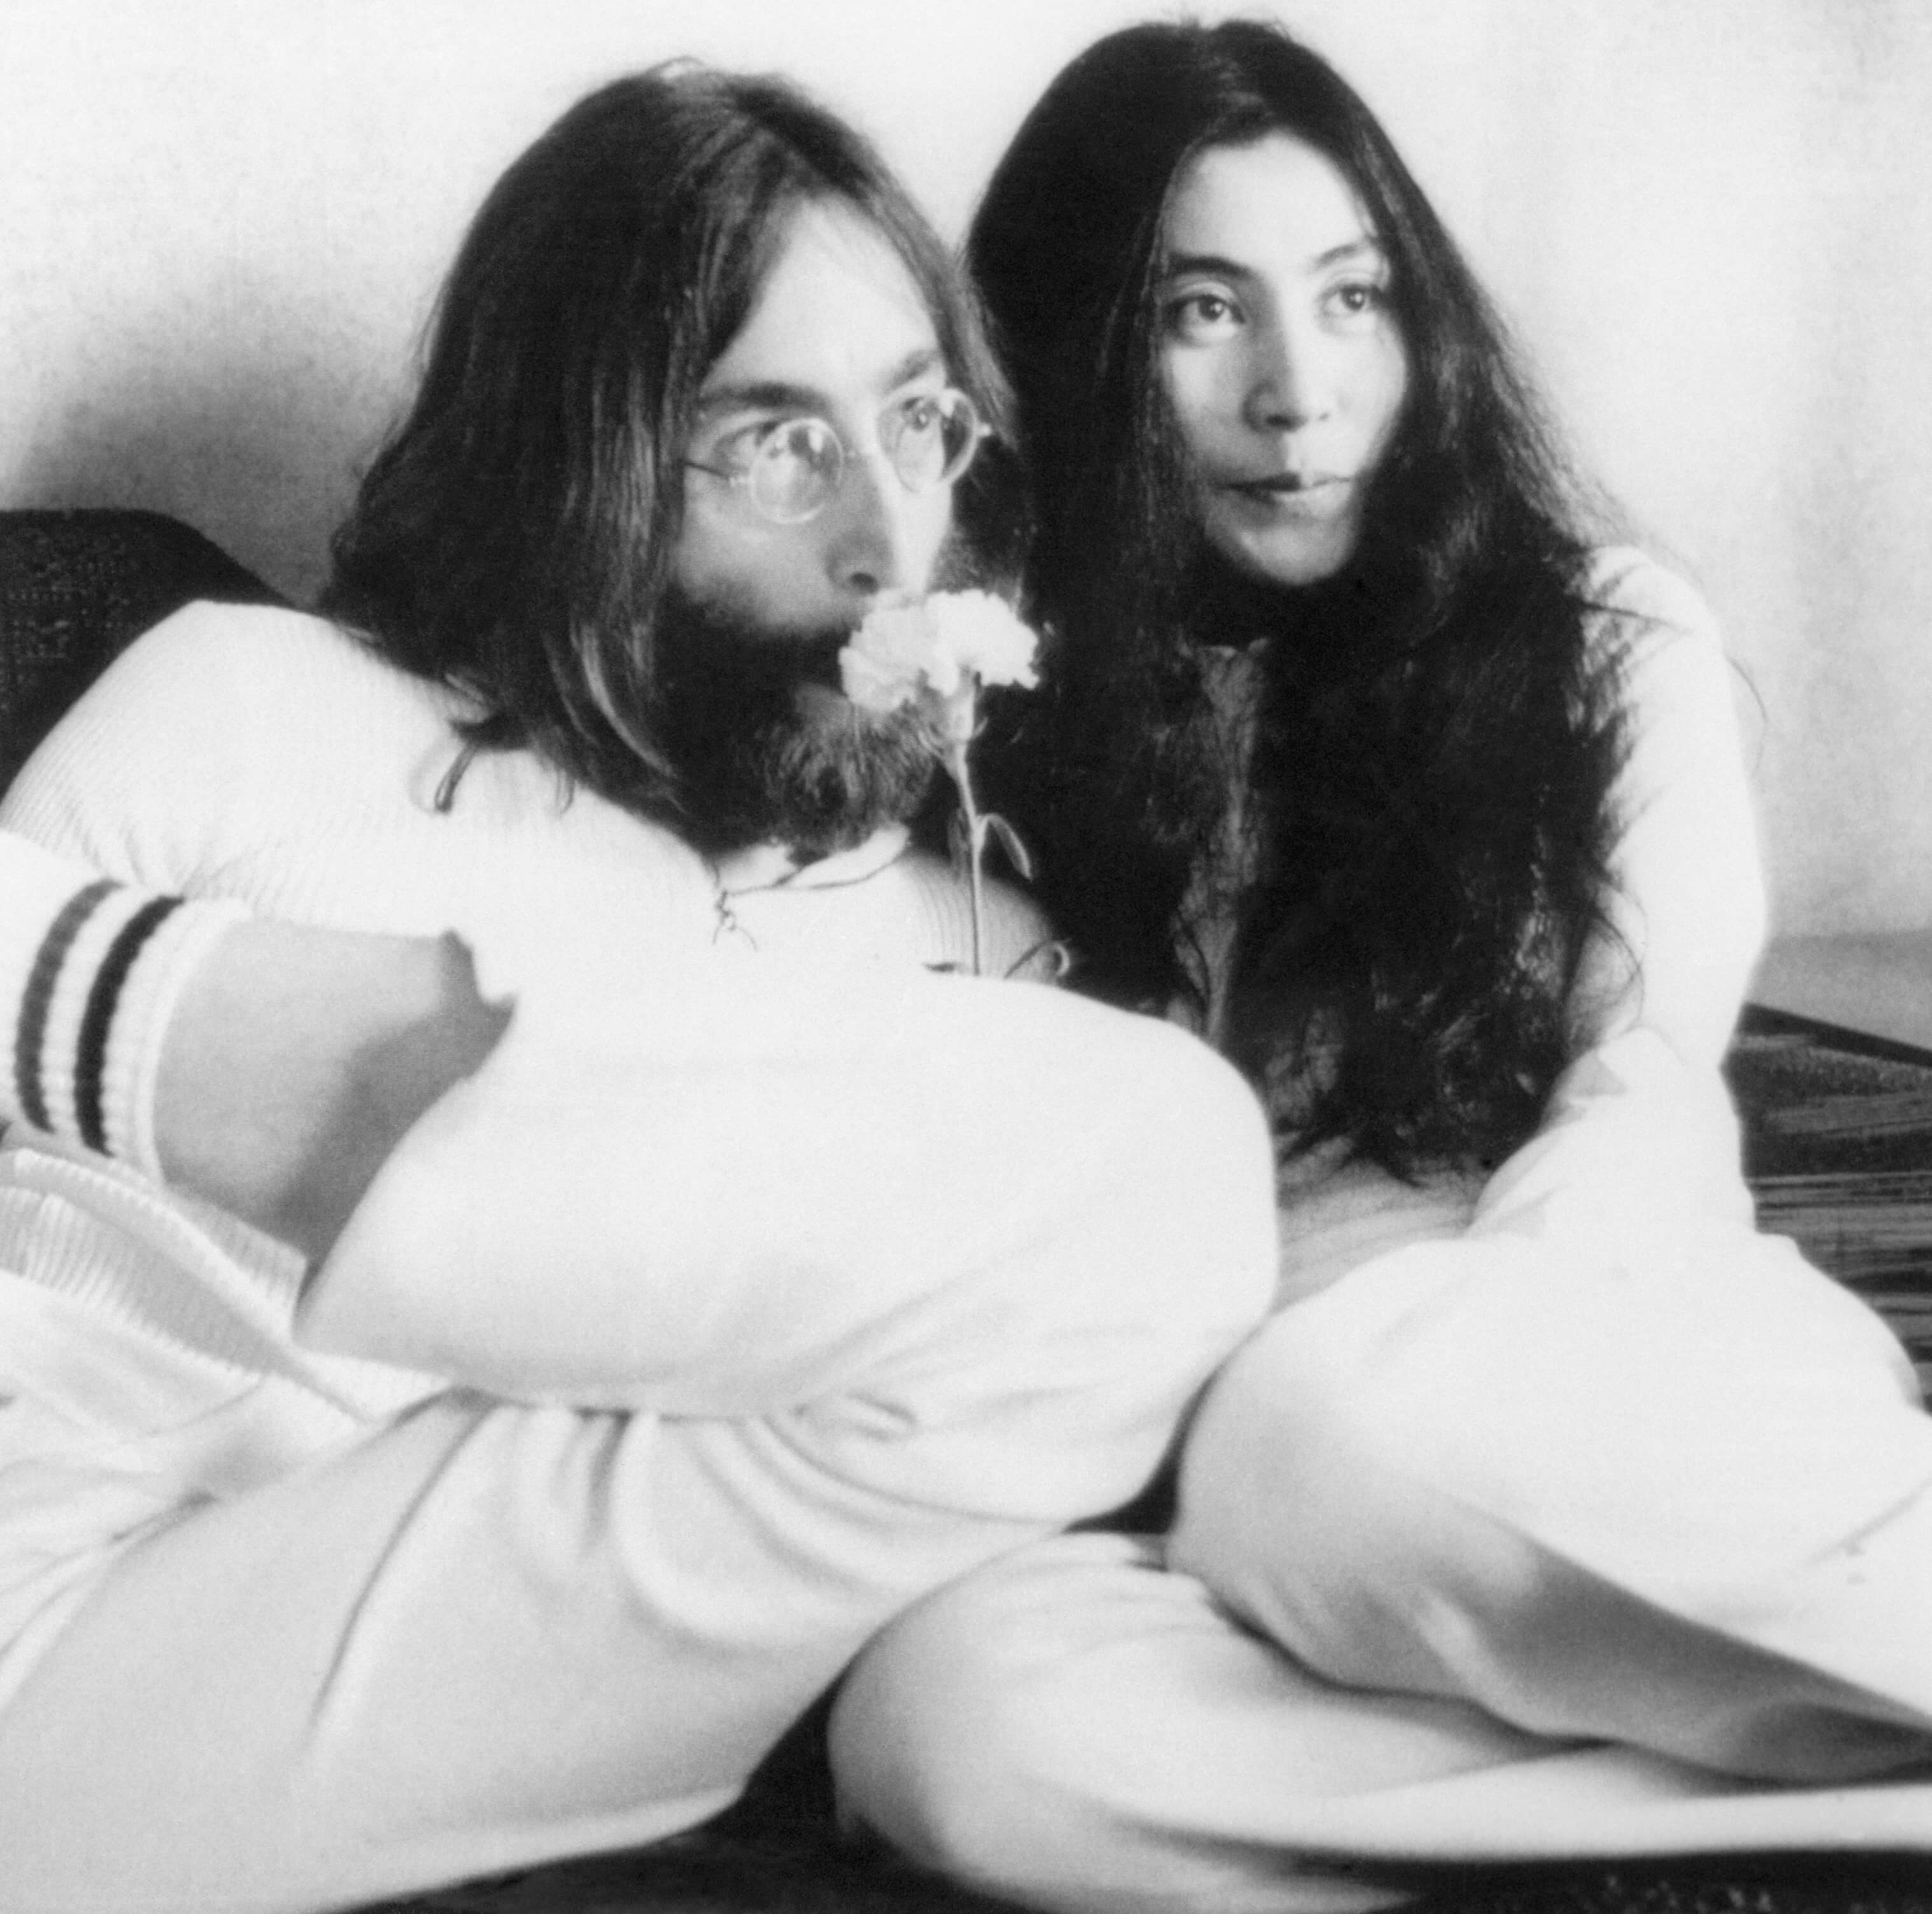 John Lennon and Yoko Ono with a flower